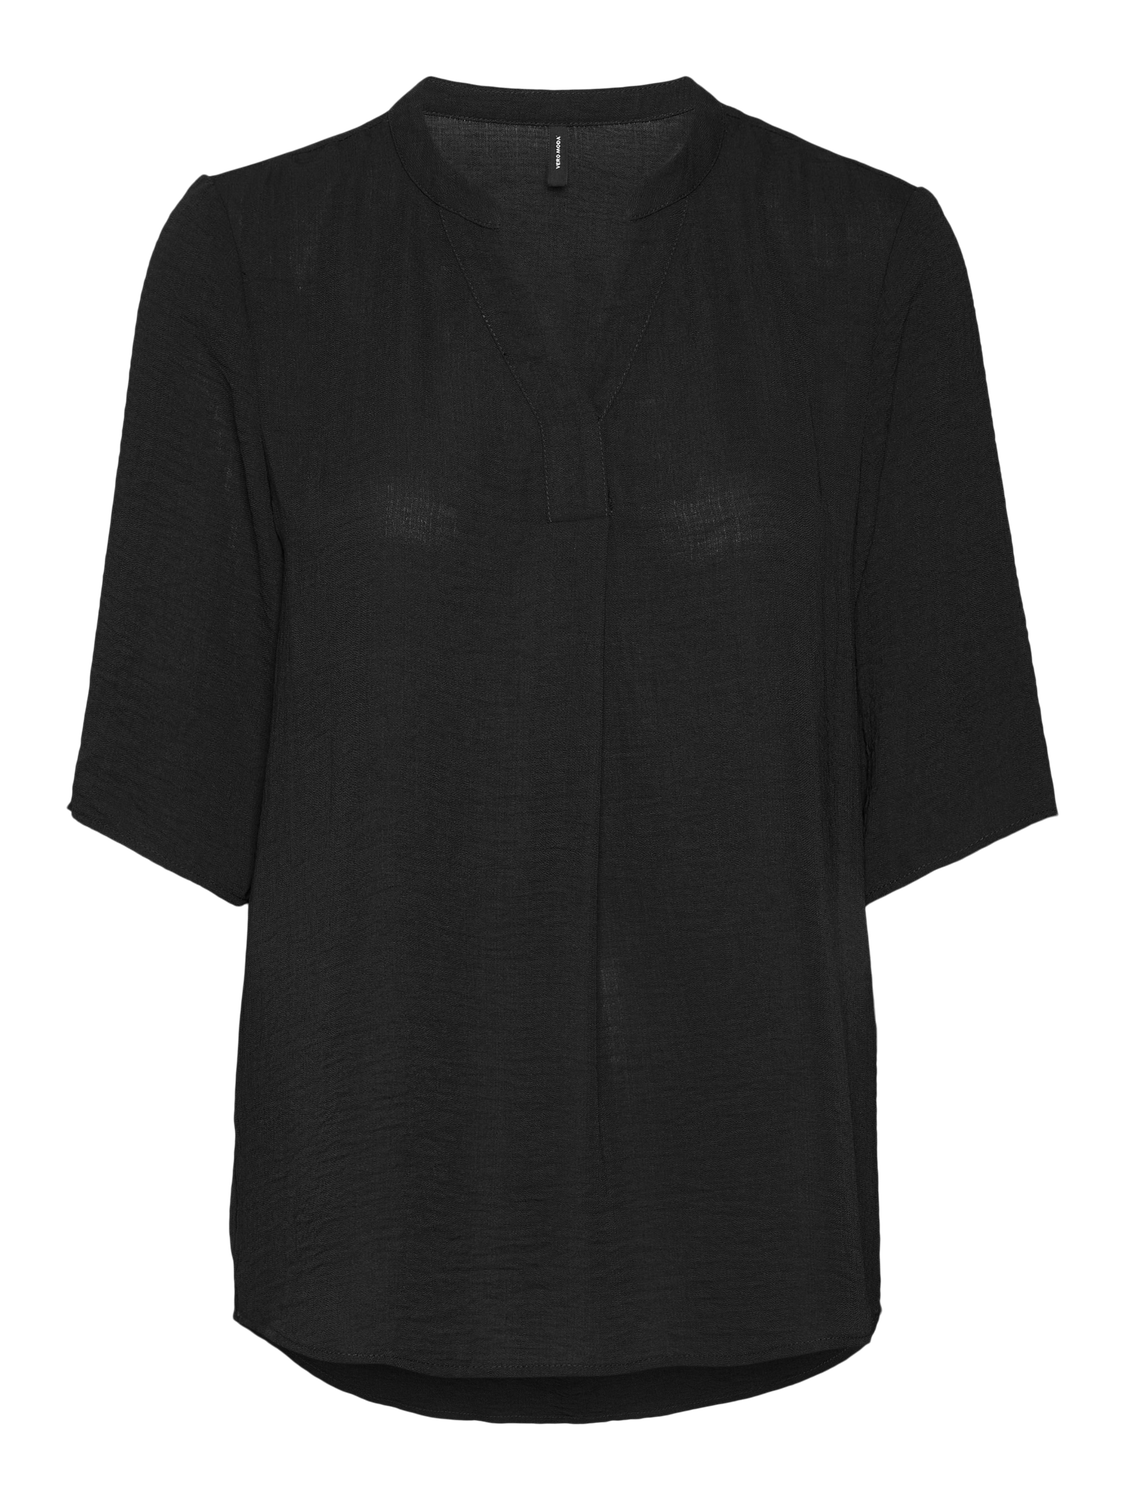 VMEDEL T-Shirts & Tops - Black